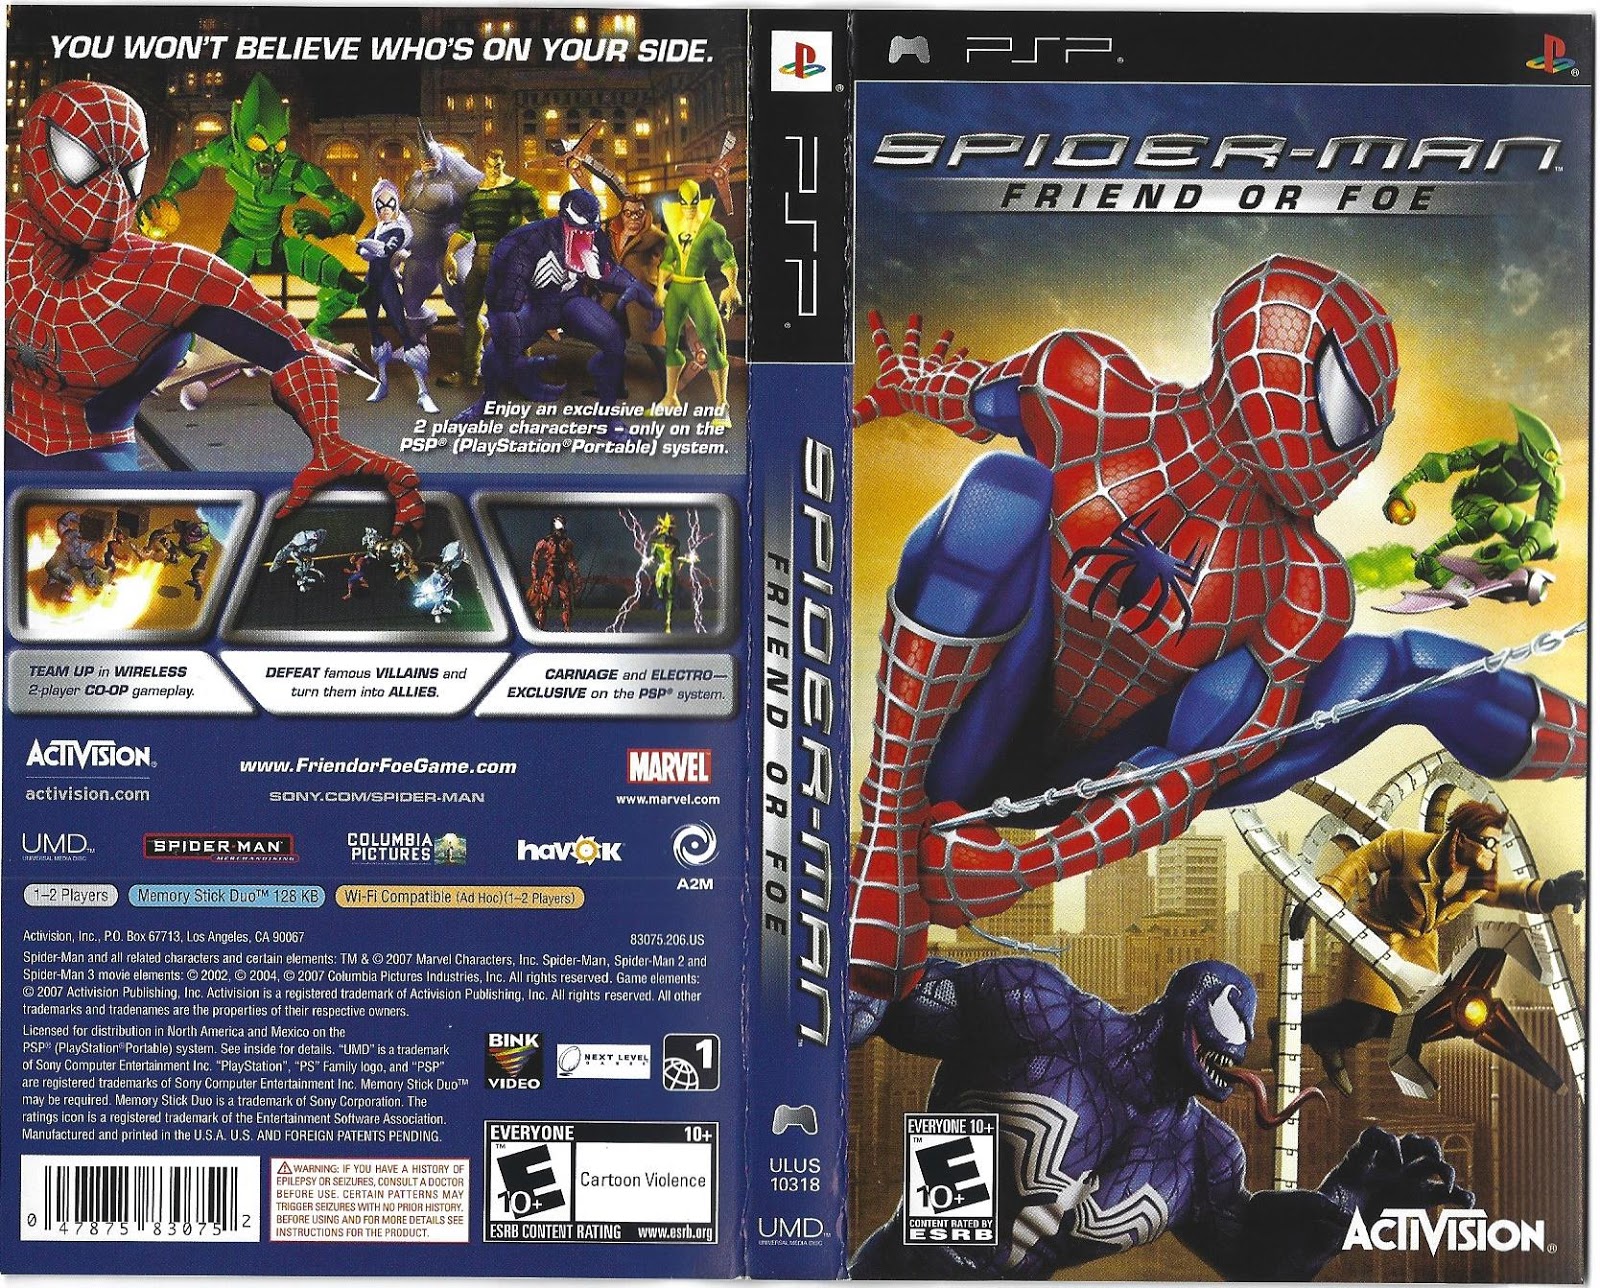 PSP Hardcore: No Nonsense Review: Spider-man Friend or Foe PSP